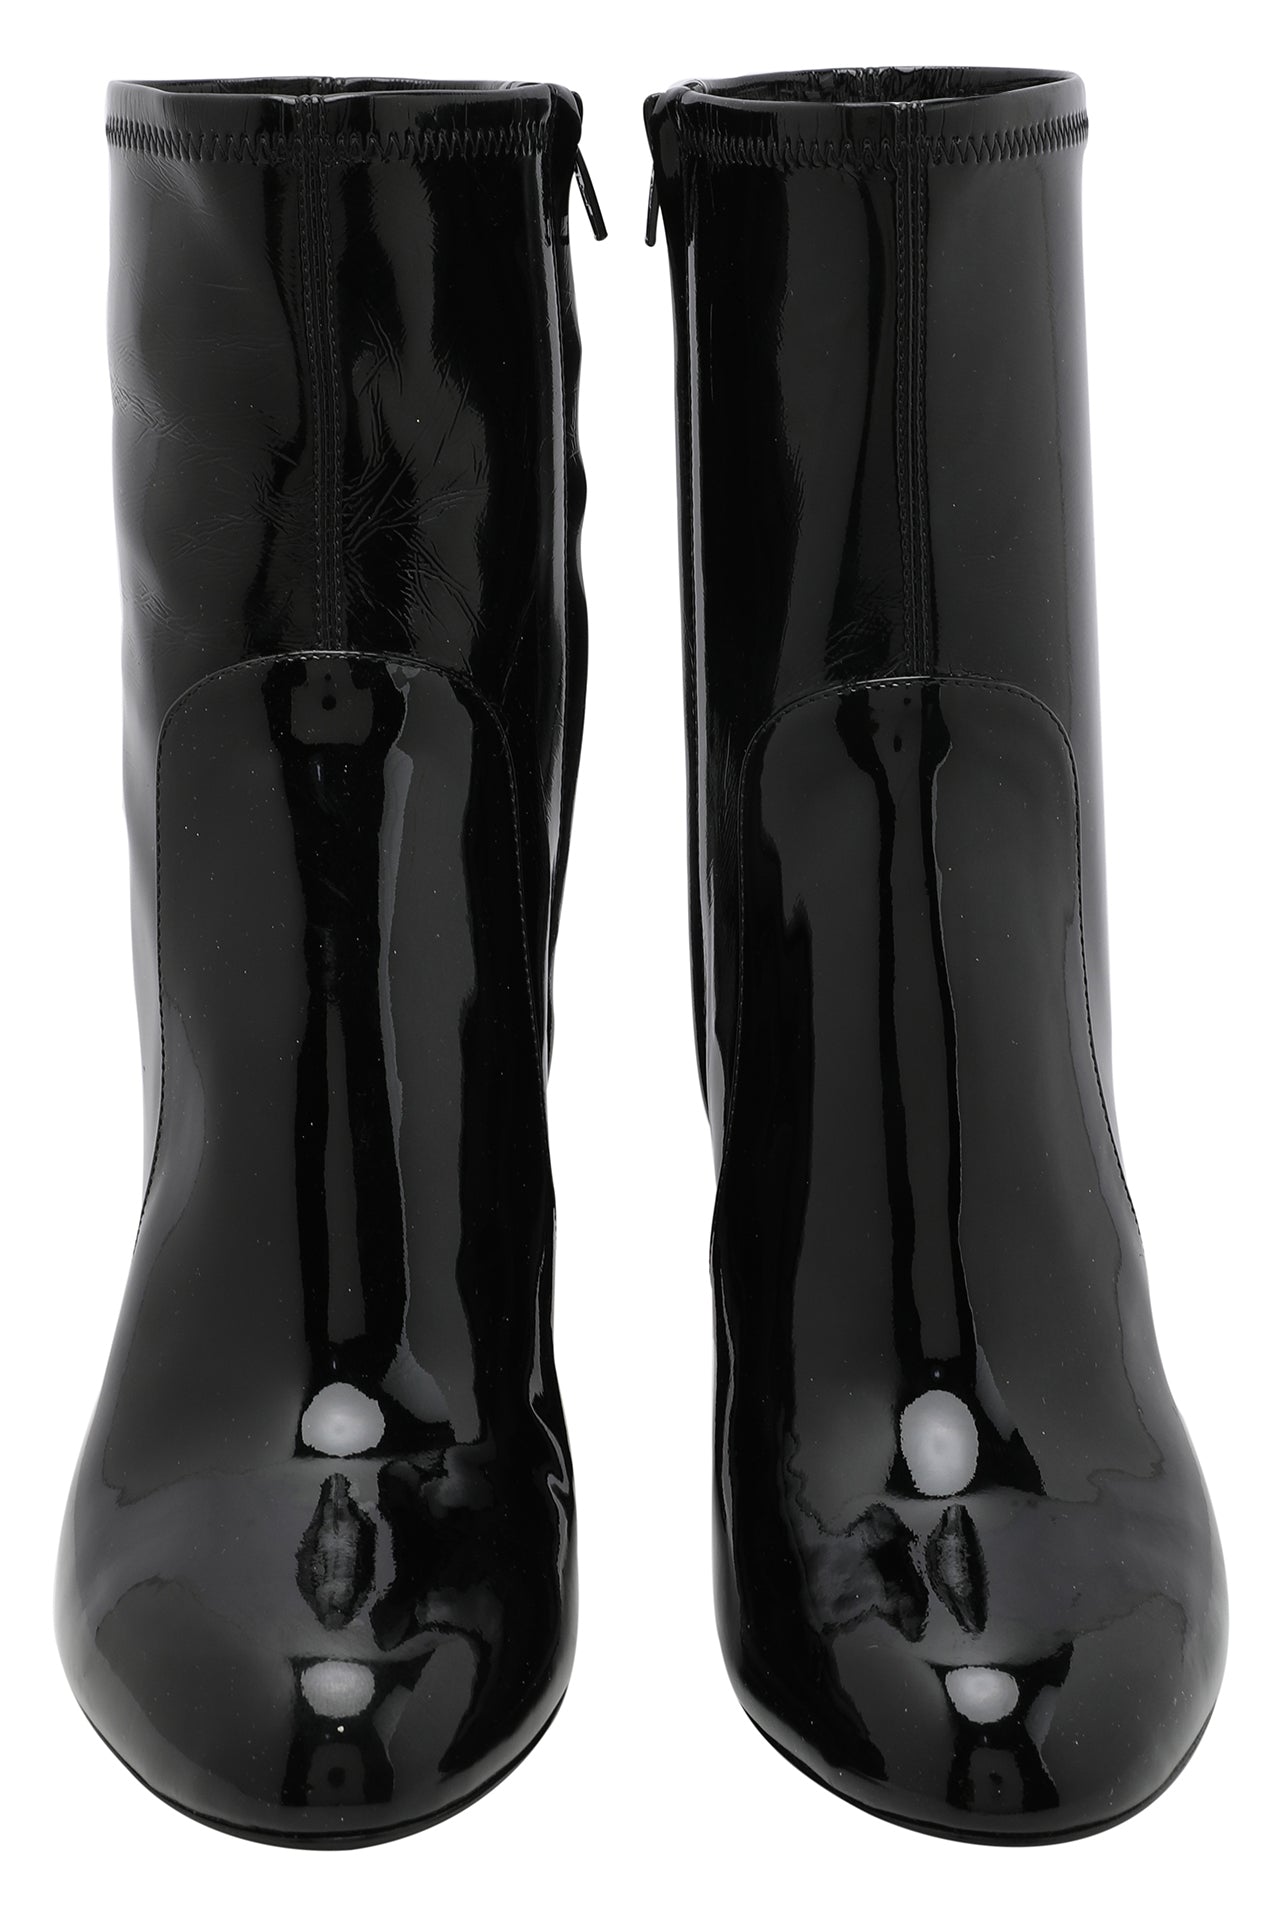 Louis Vuitton Black Patent Leather Silhouette Ankle Boots EU 35